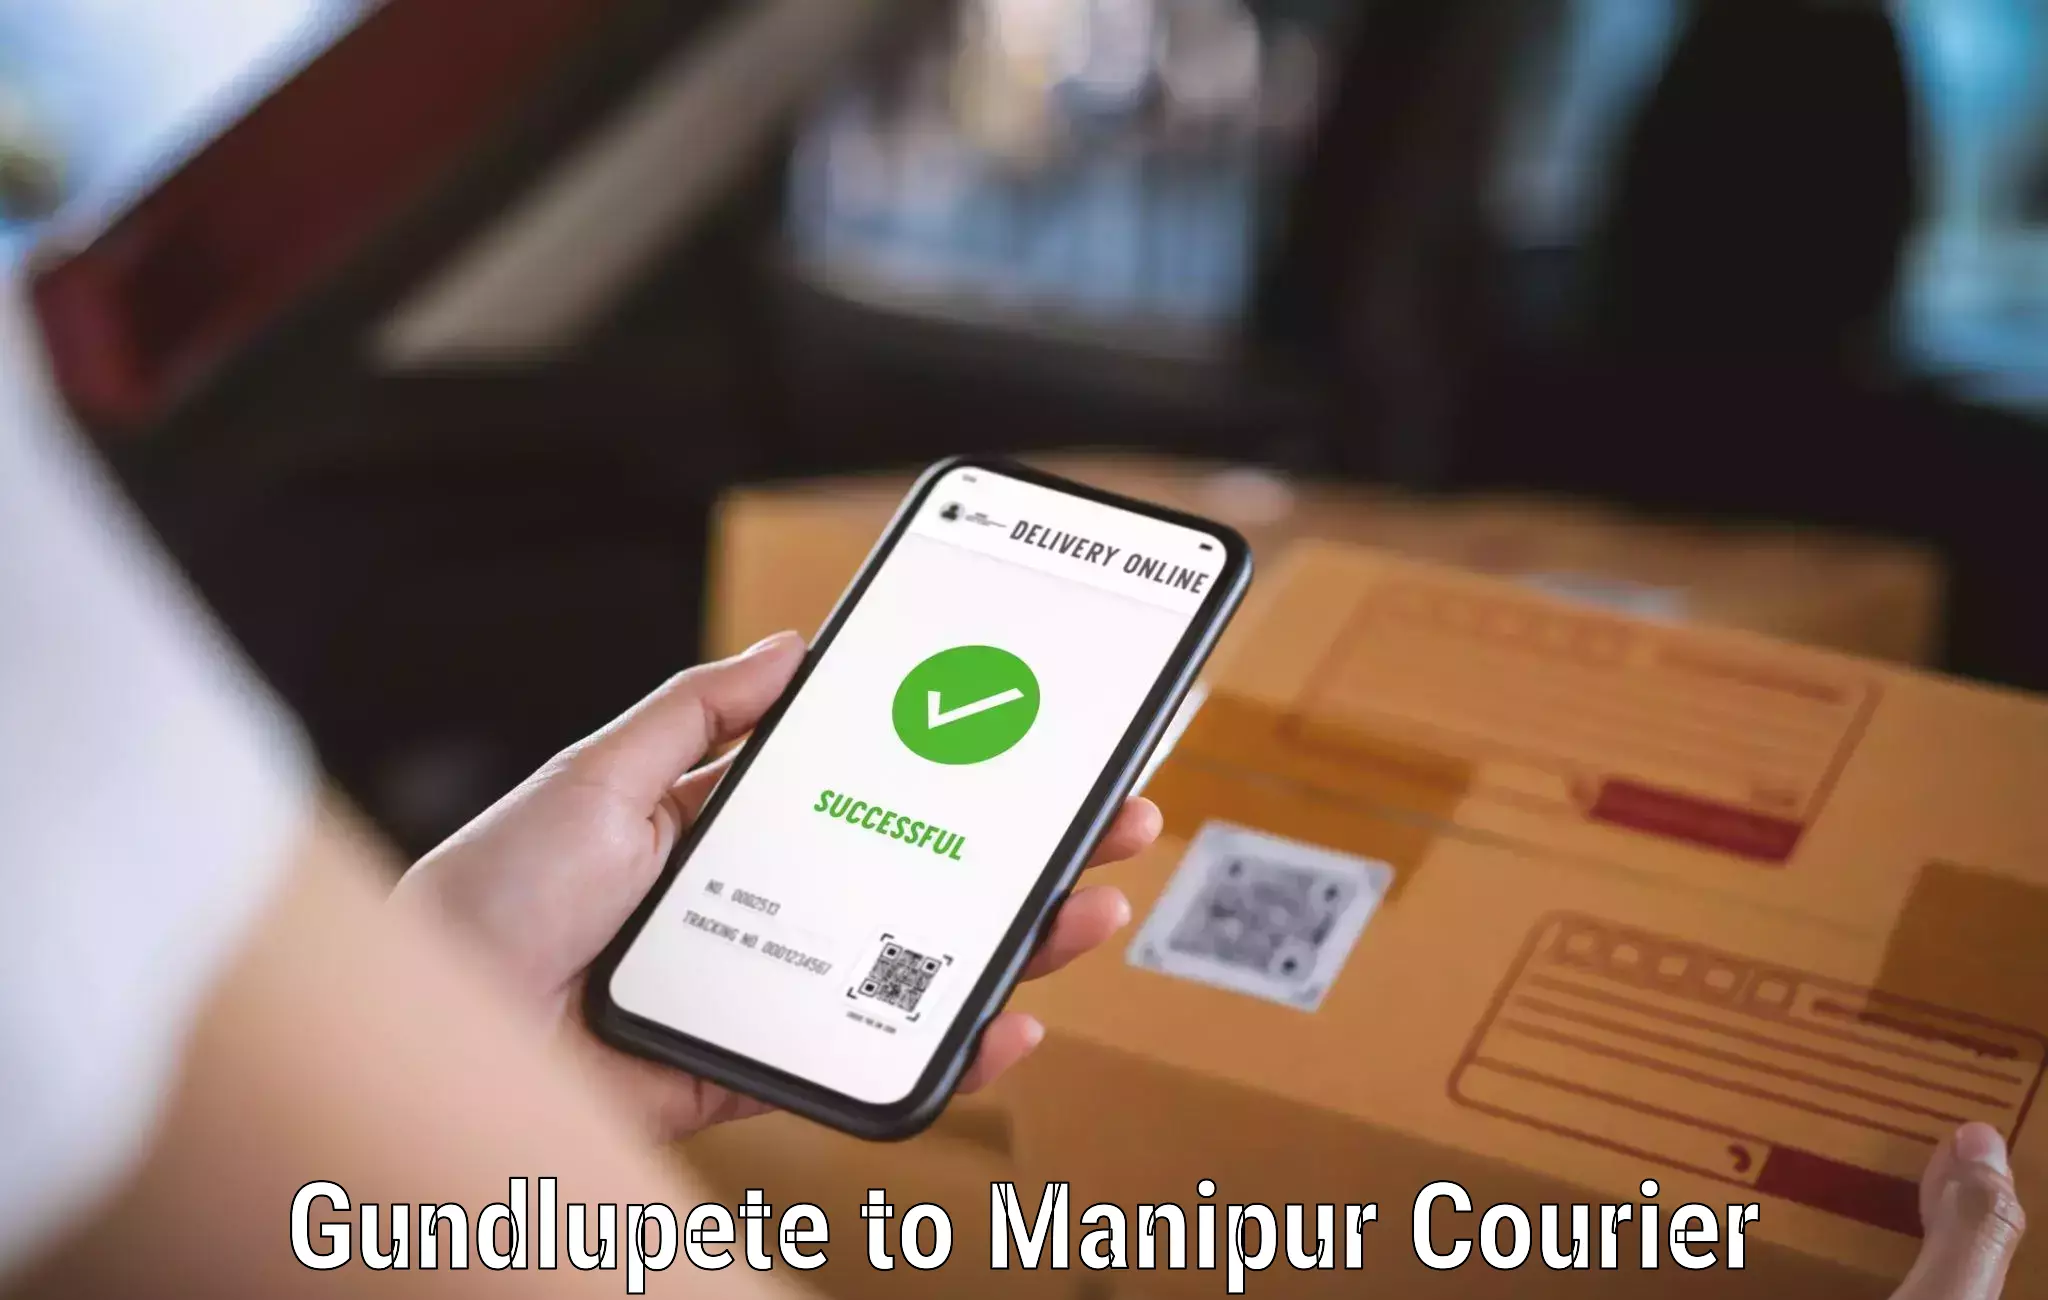 Courier service partnerships Gundlupete to Kanti